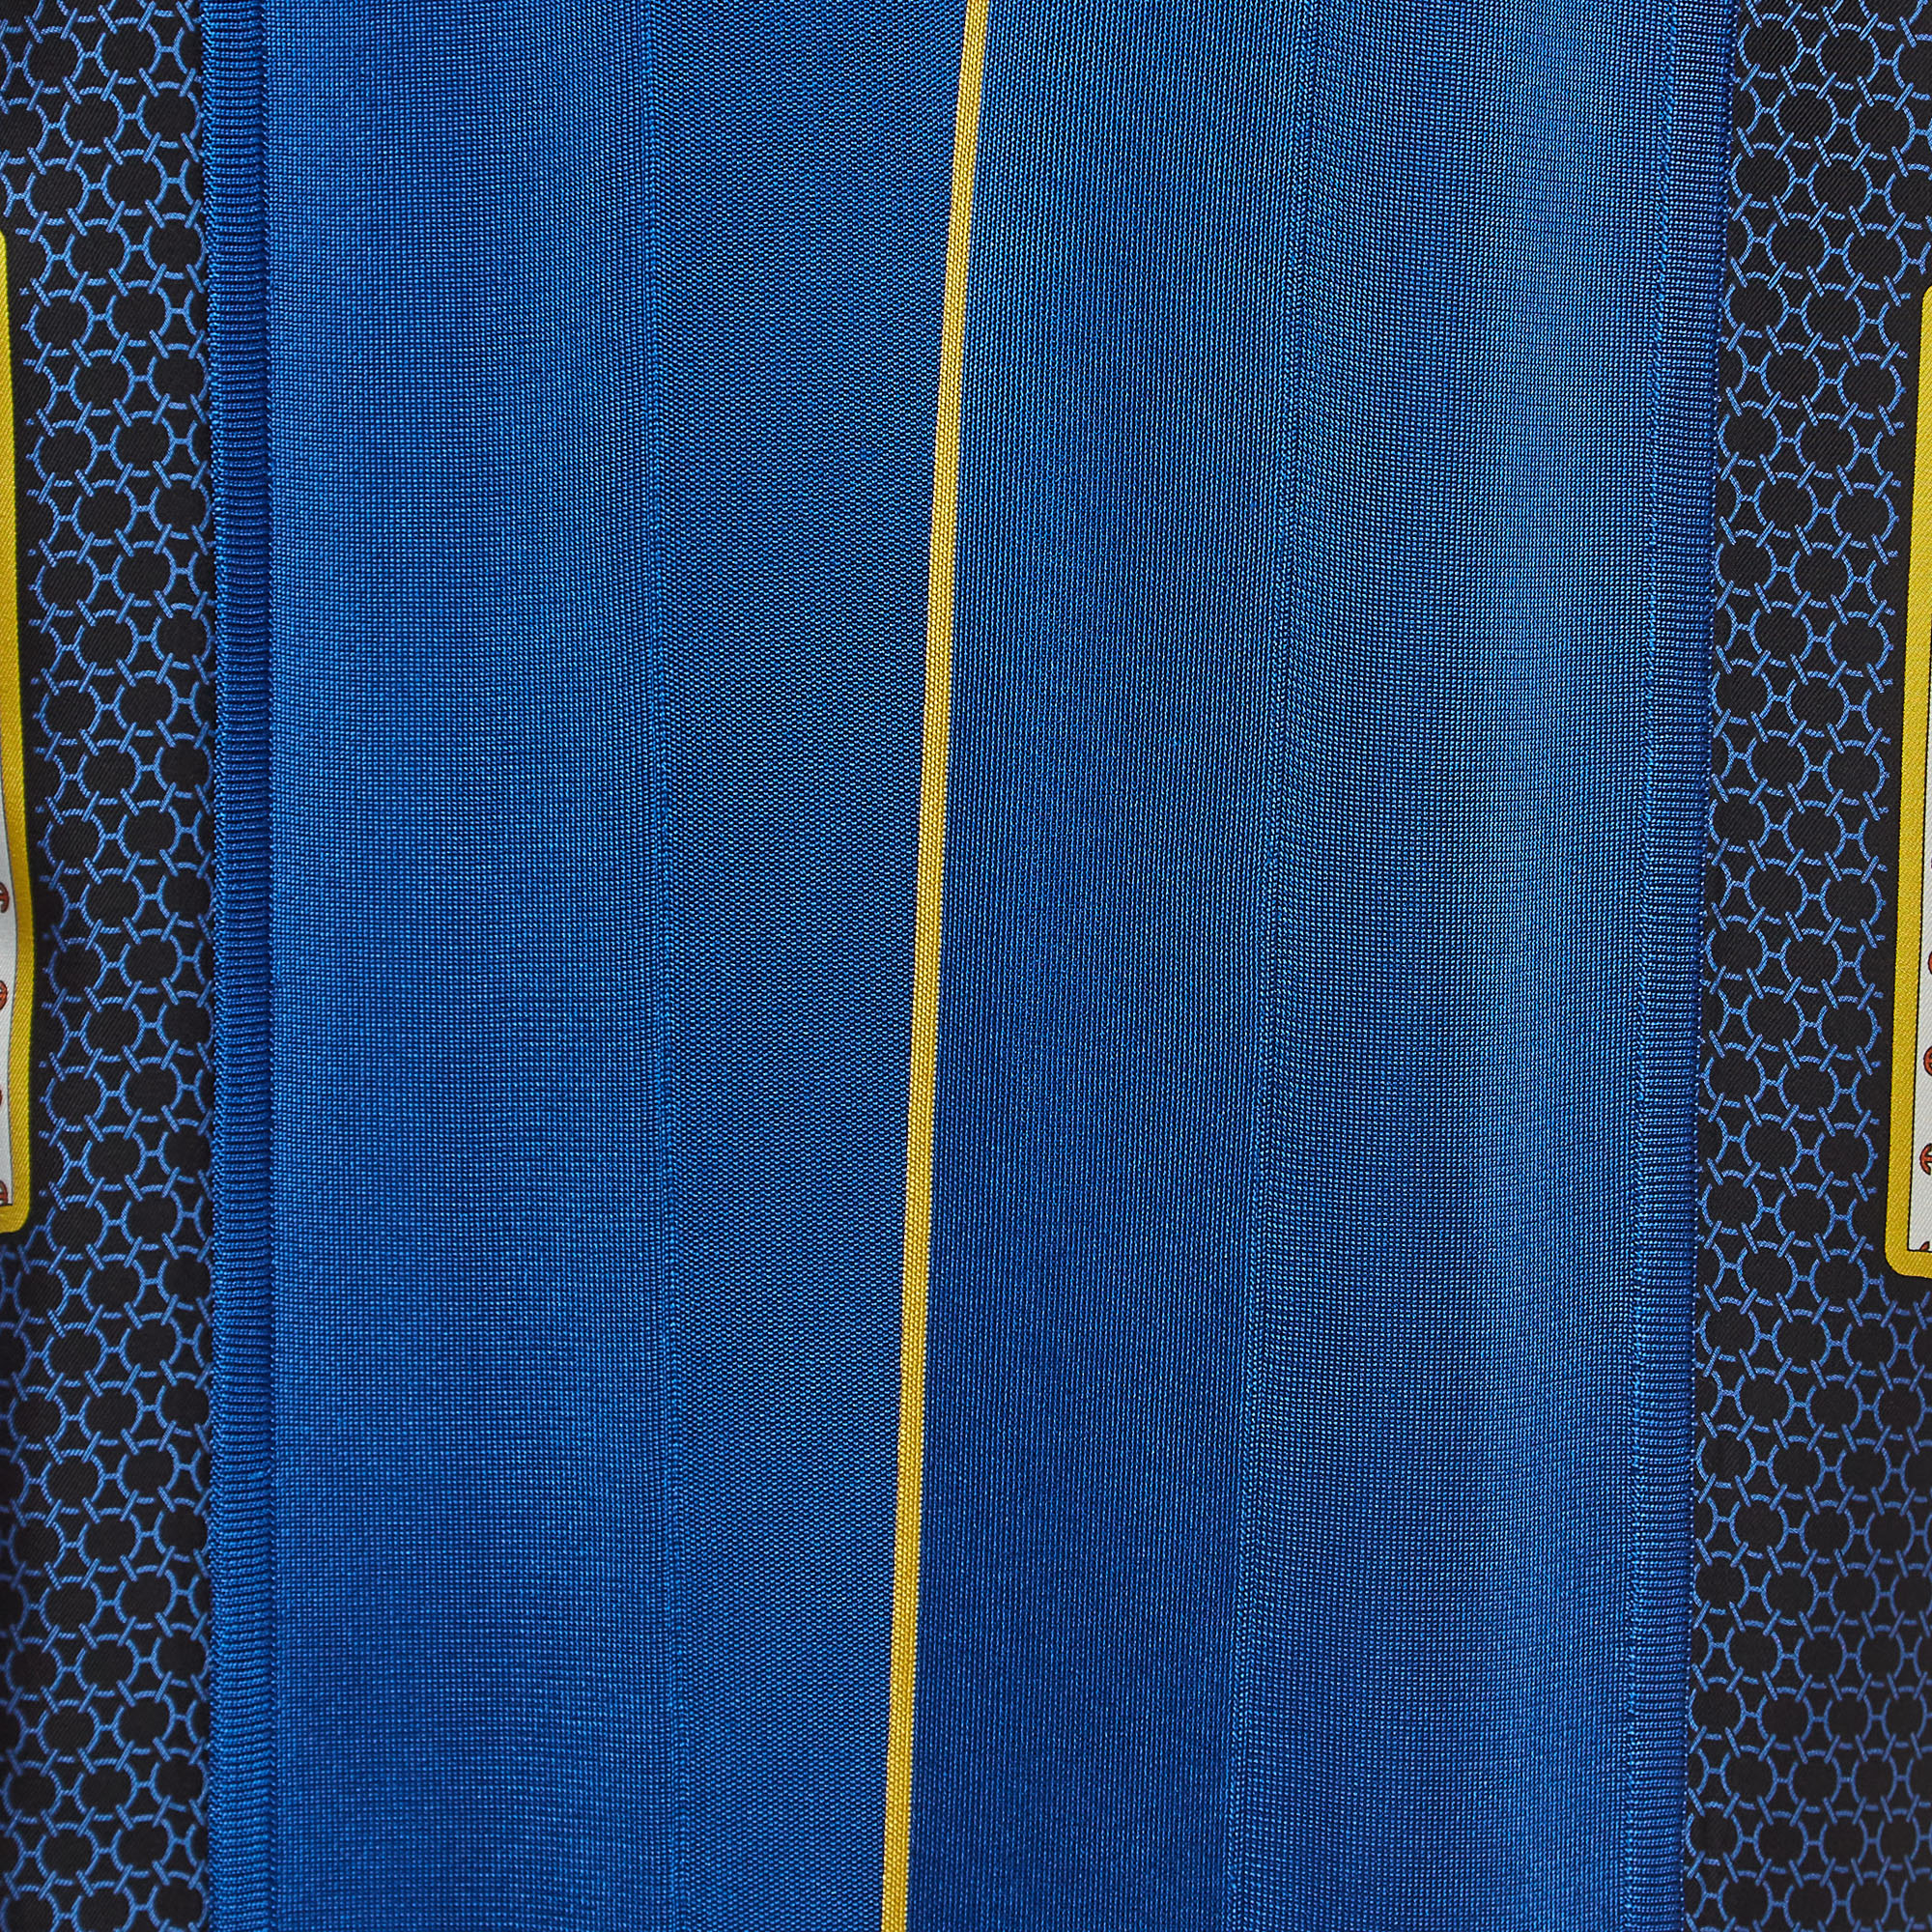 Hermes Blue/Multicolor Printed Twill Silk Open Cardigan S